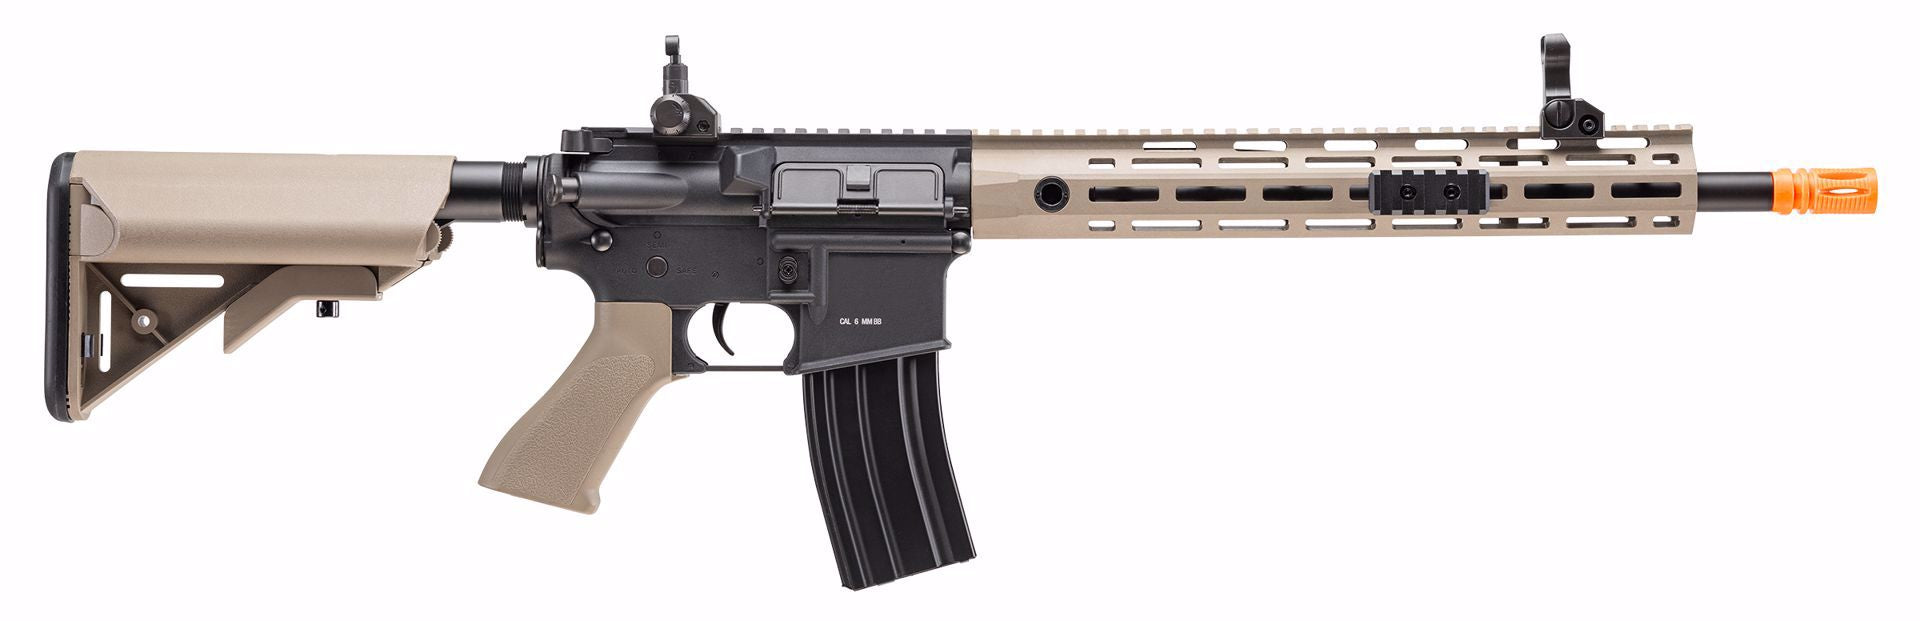 ELITE FORCE USA, UMAREX USA Elite Force M4 CFRX Black and Tan EyeTrace AEG Airsoft Rifle Gun